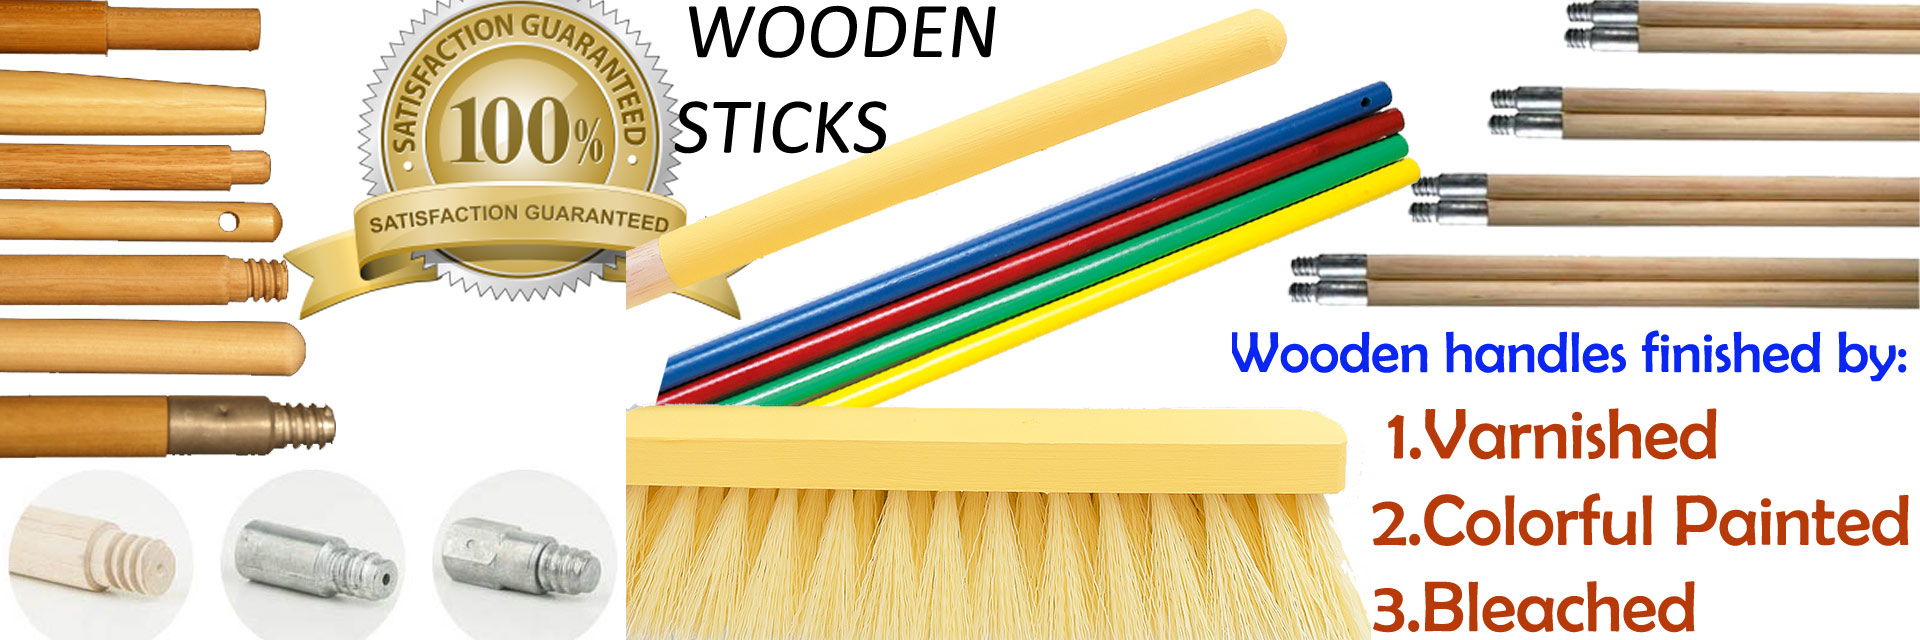 wooden sticks manufacturer,supplier,factory in china